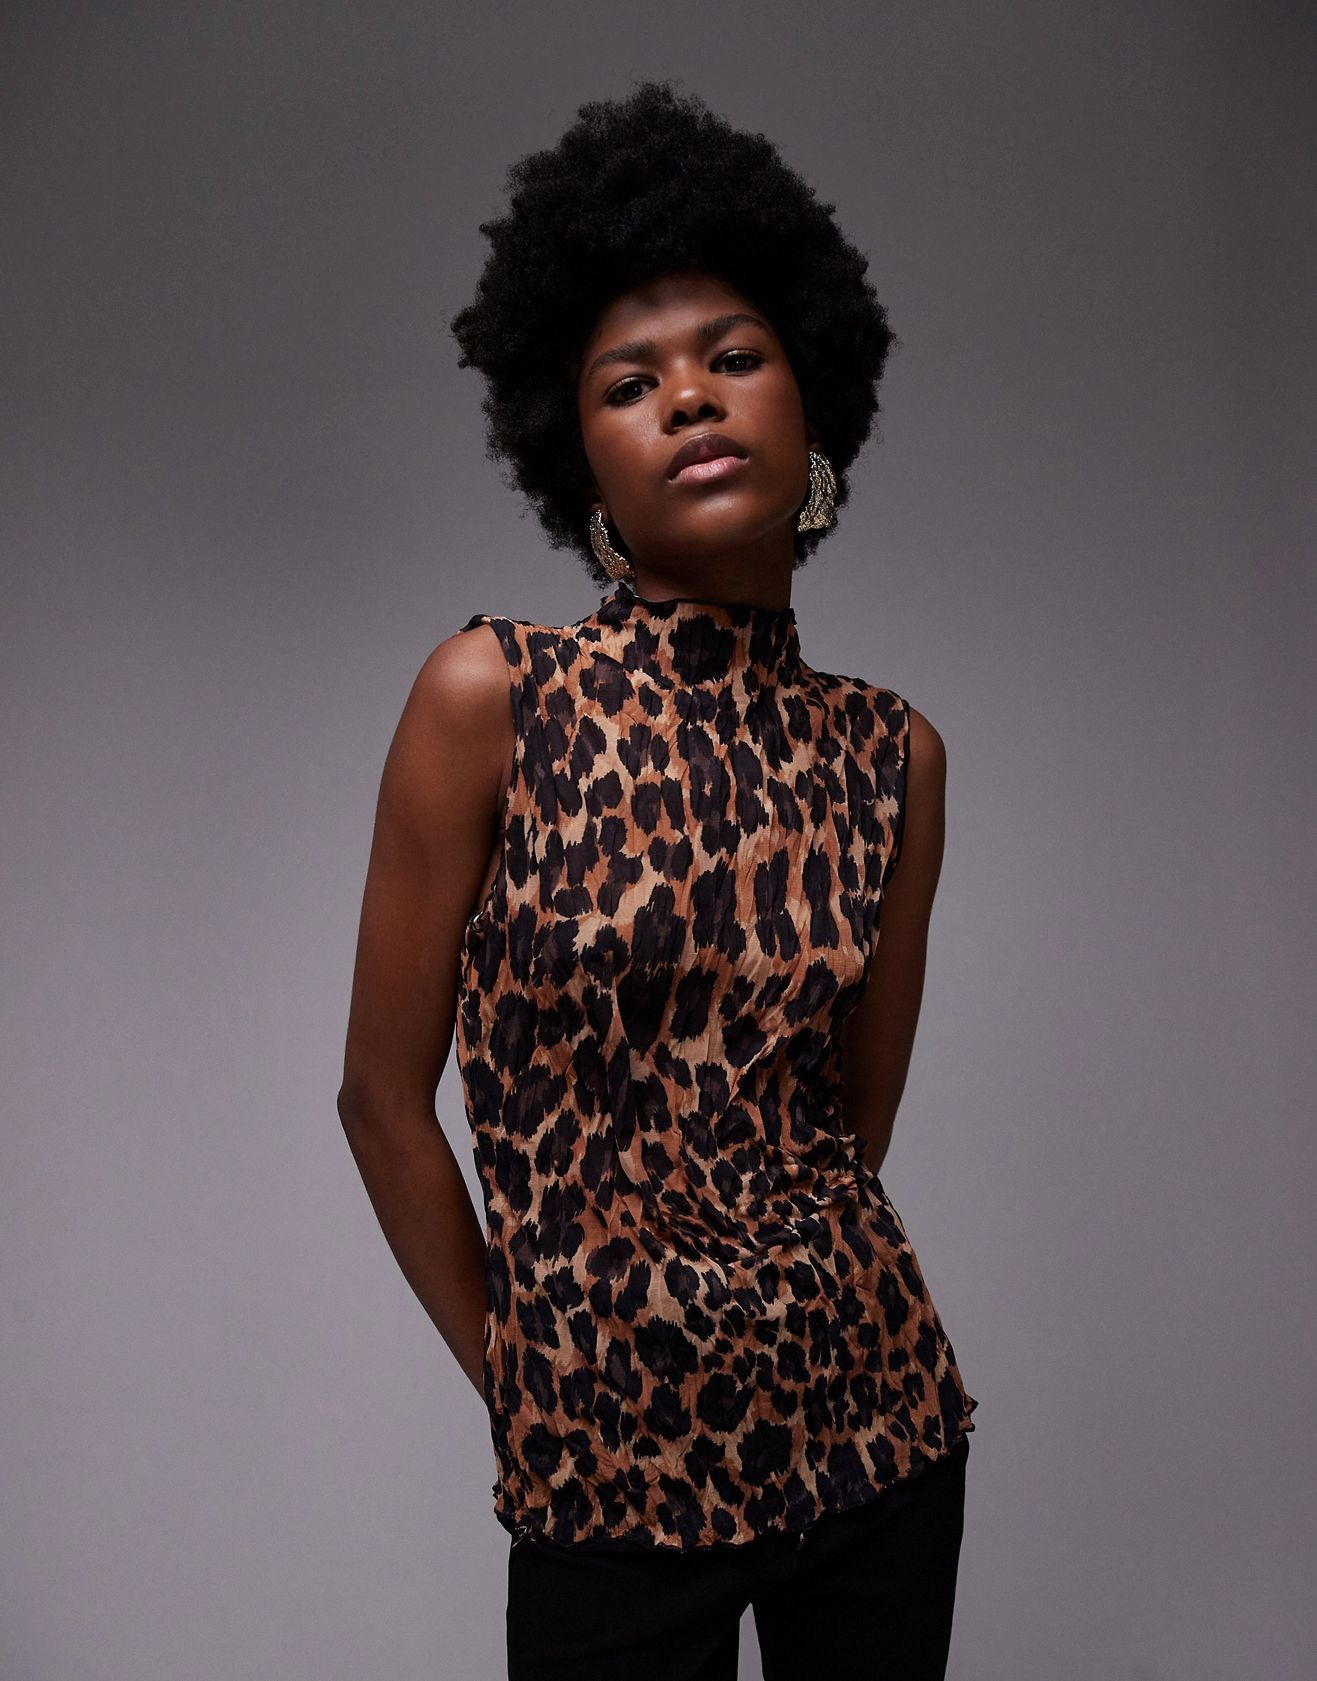 Топ Topshop Crinkle Sleeveless In Leopard Print, коричневый женский топ без рукавов футболка 2020